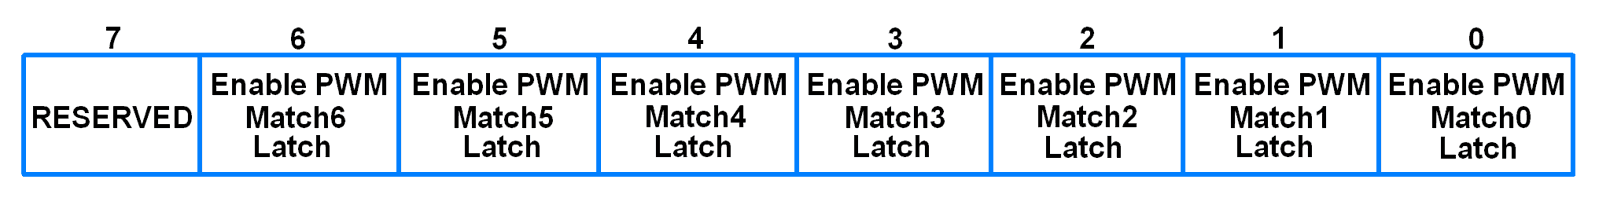 PWMLER (PWM Latch Enable Register)